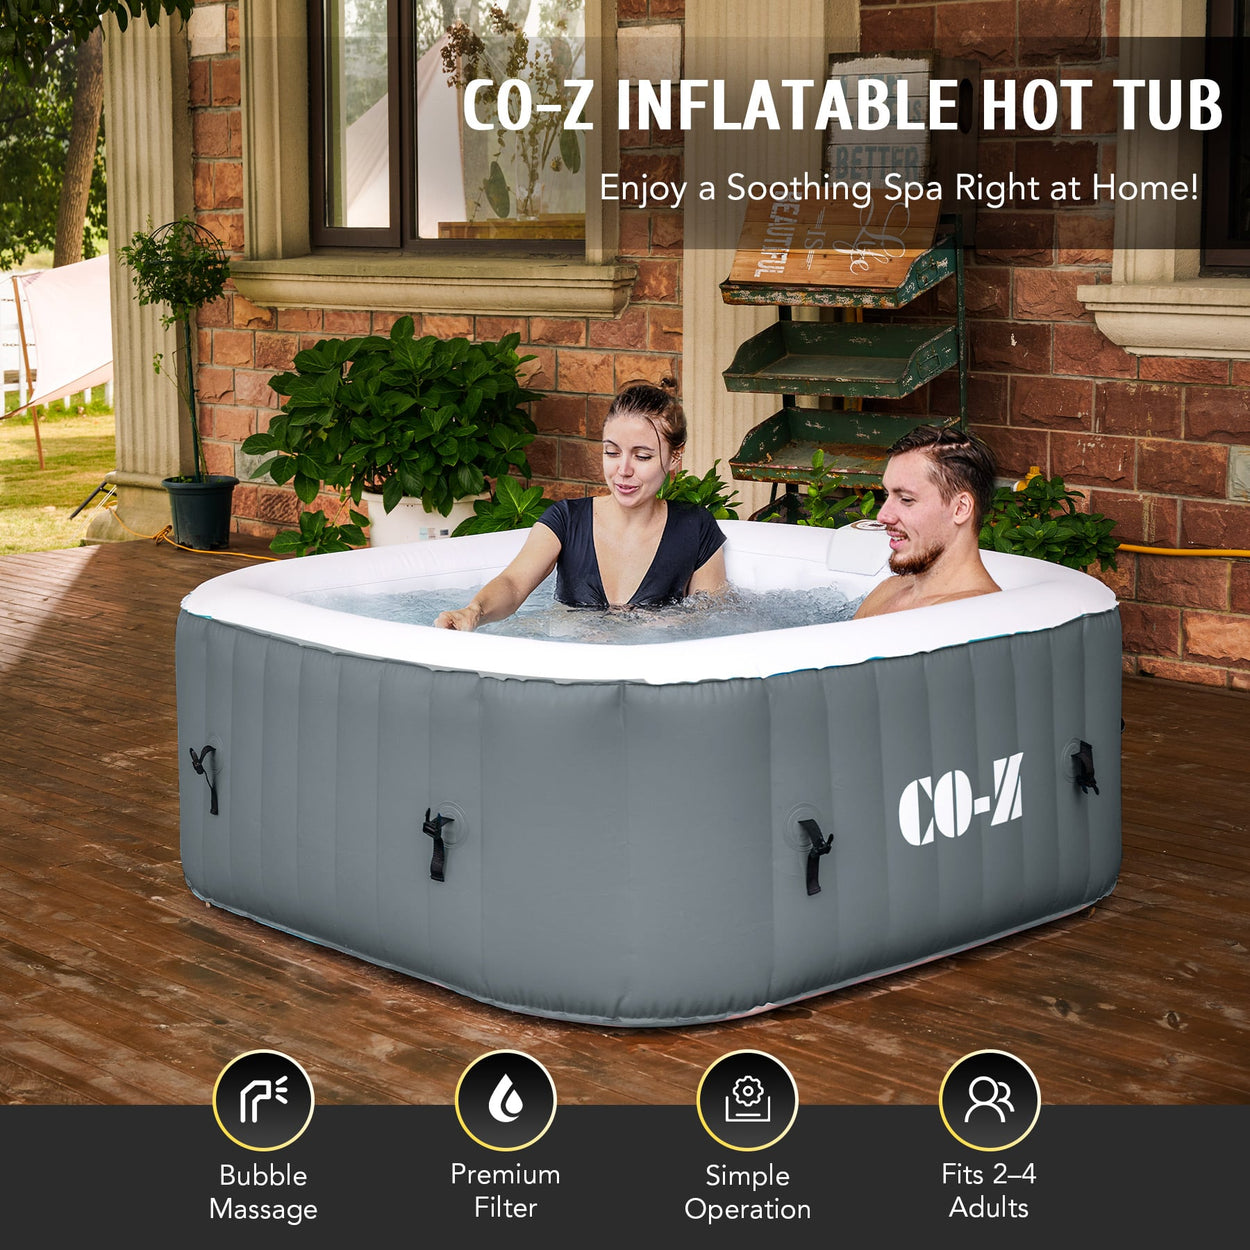 2-person-hot-tub